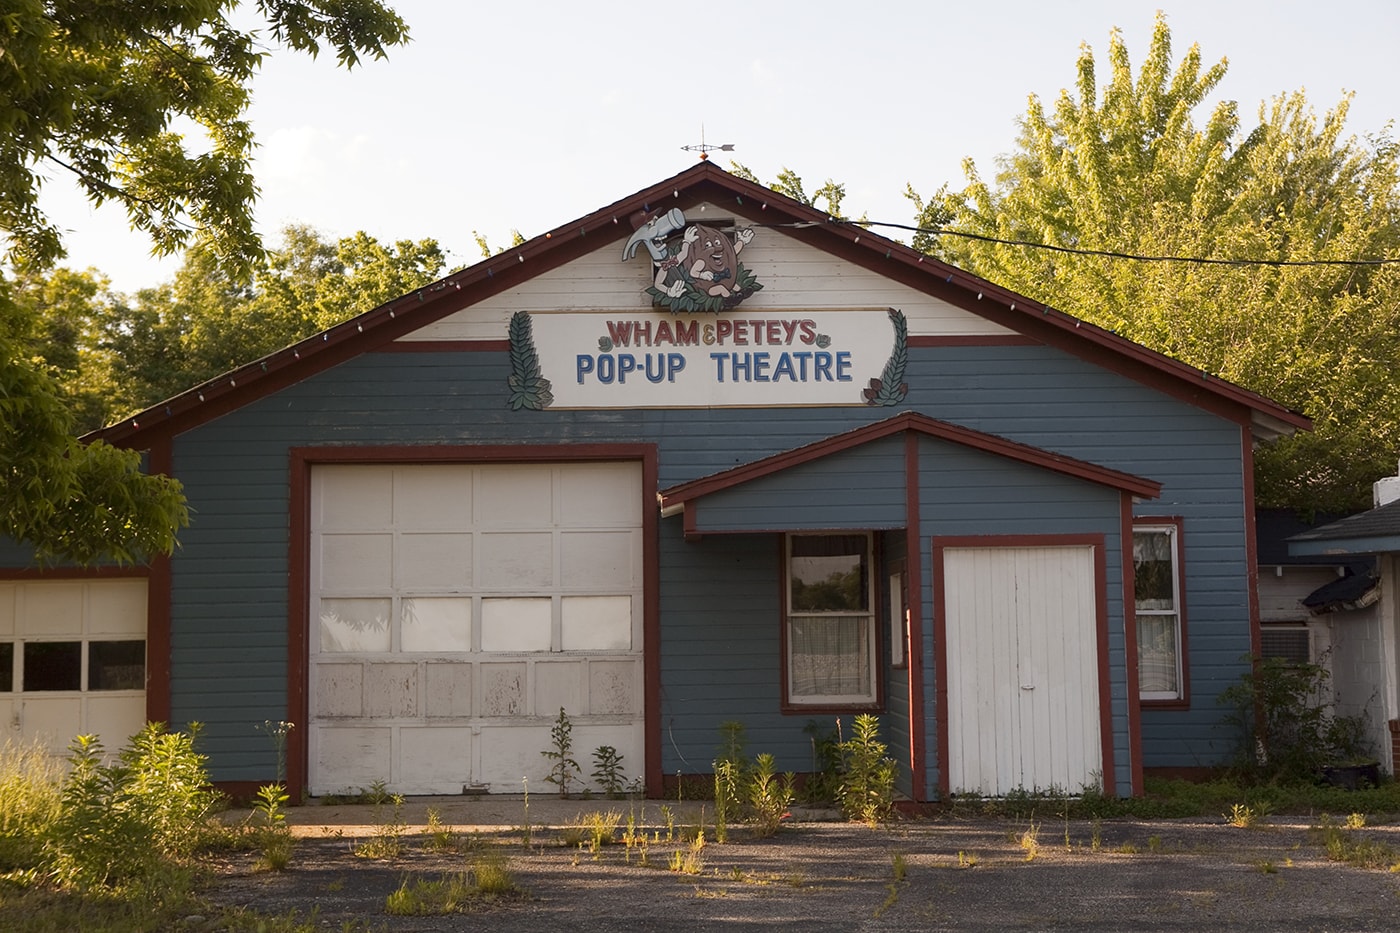 Wham & Petey's Pop-Up Theatre at the World's Largest Pecan in Brunswick, Missouri